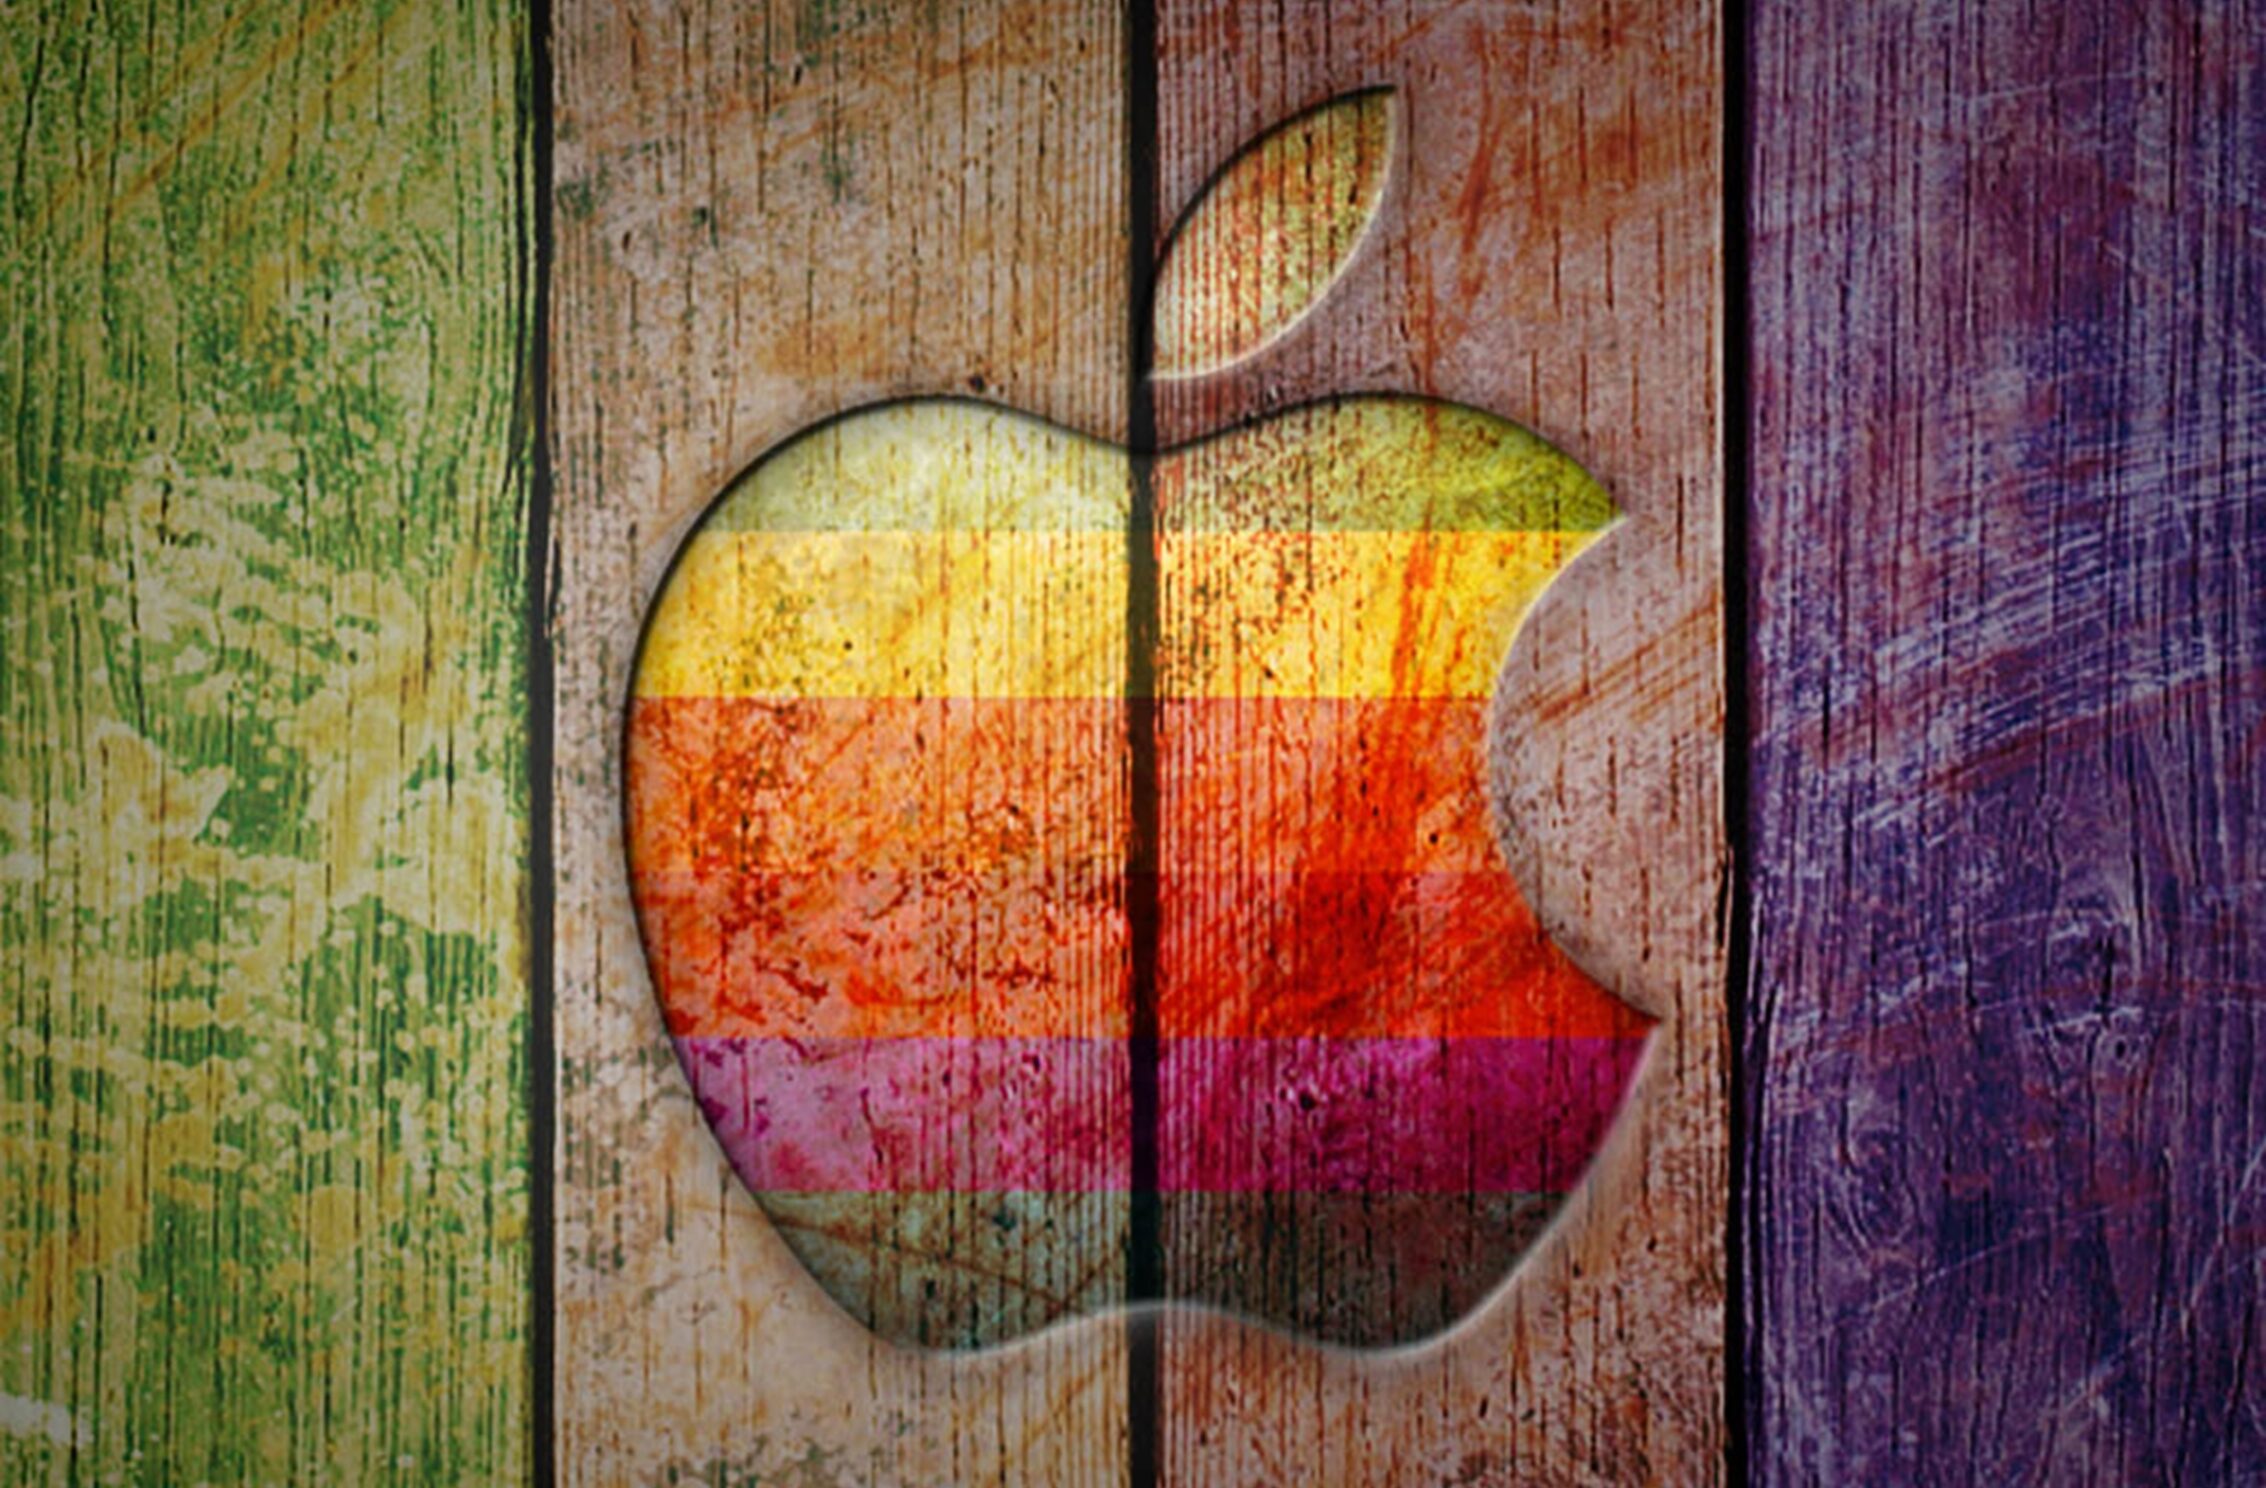 2266x1488 wallpaper Apple Logo on Colorful Wood Ipad Wallpaper 2266x1488 pixels resolution